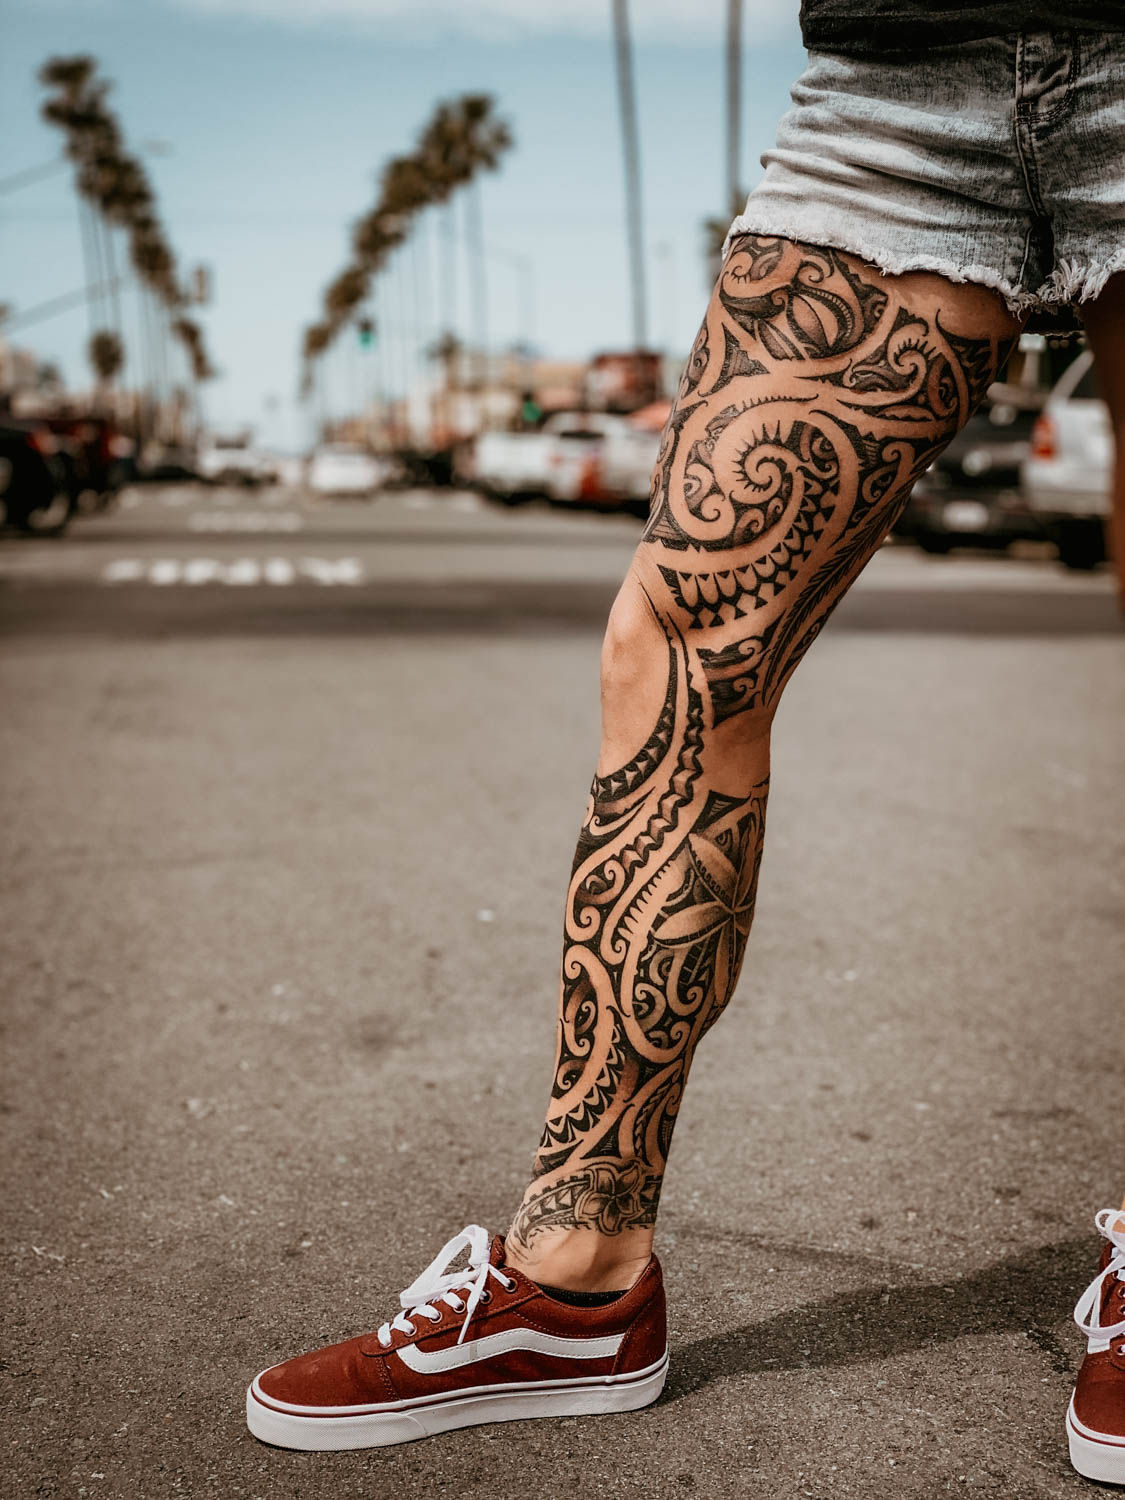 Hawaiian tattoo woman hi-res stock photography and images - Alamy